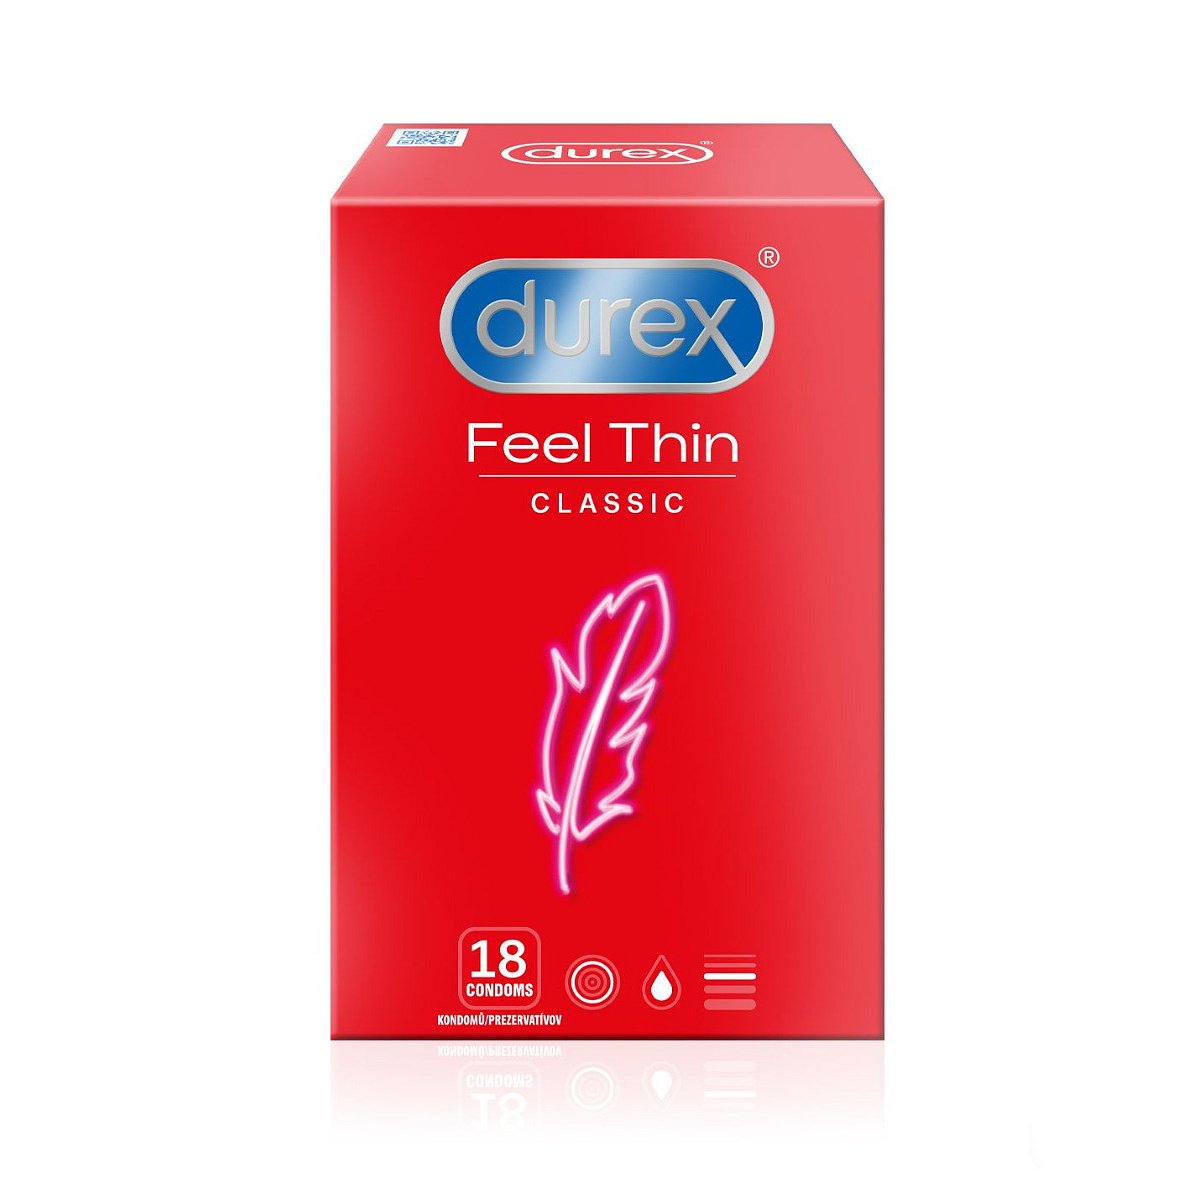 Durex Feel Thin Classic kondomy 18 ks